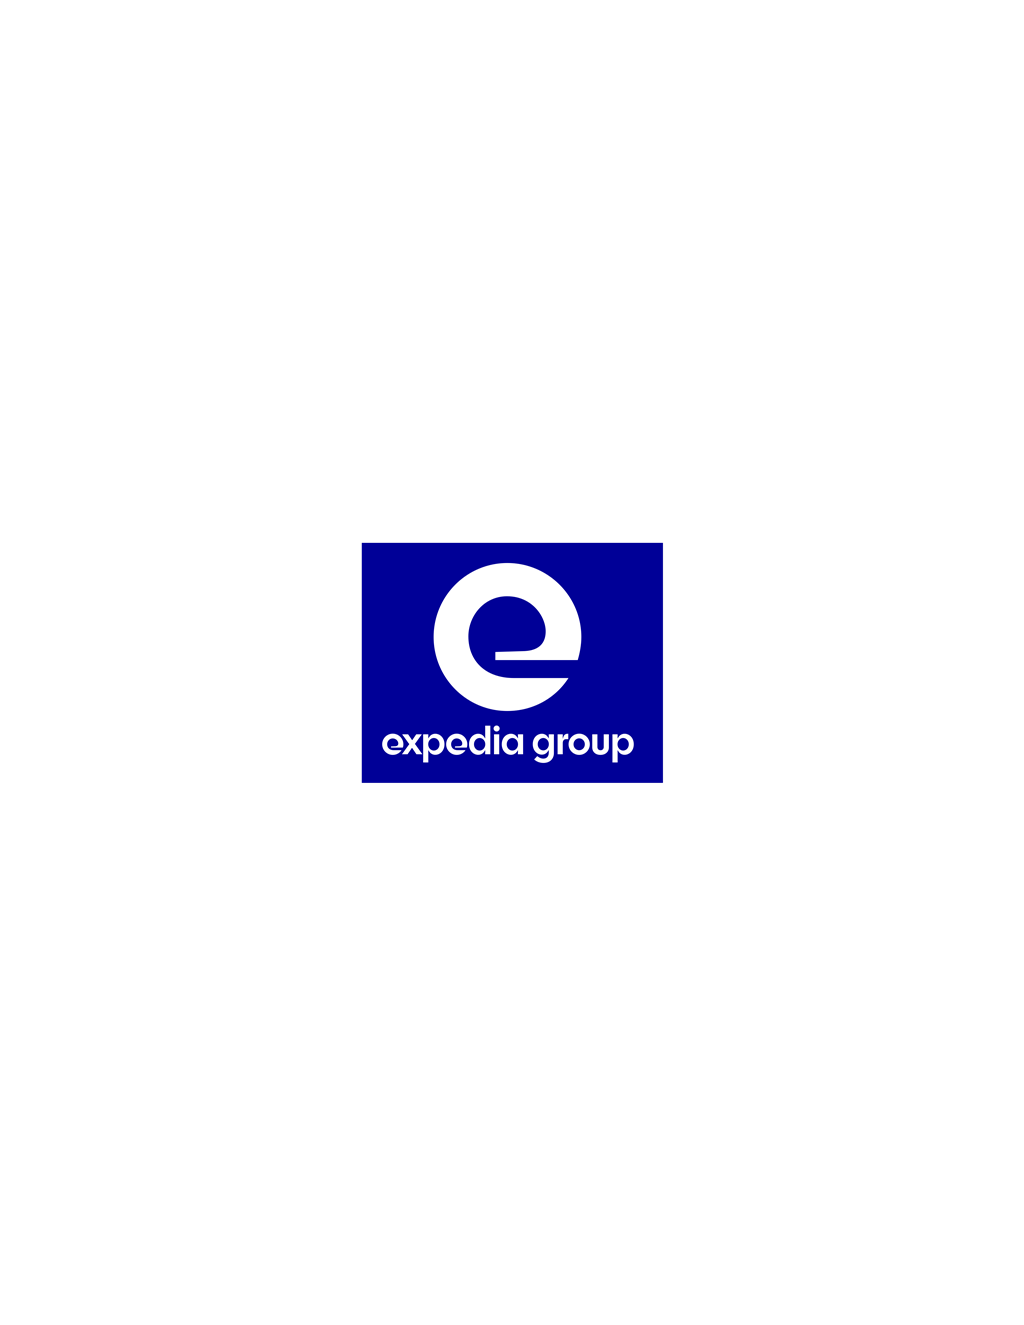 Expedia Group logotype, transparent .png, medium, large